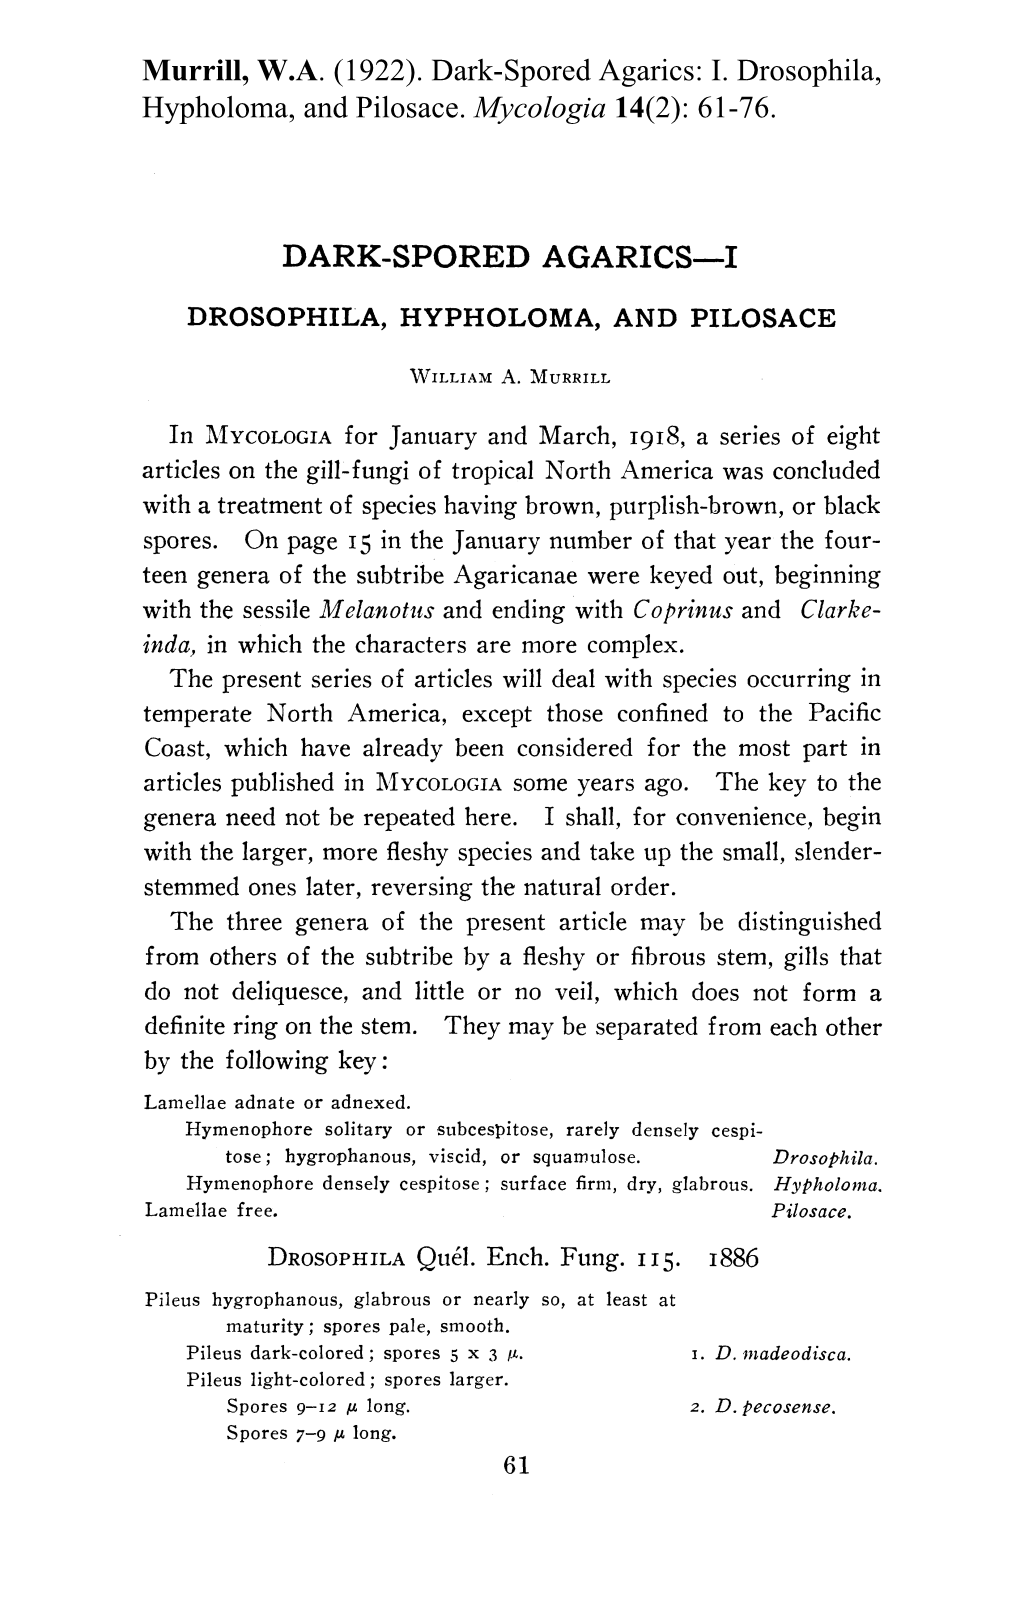 Dark-Spored Agarics: I. Drosophila, Hypholoma, and Pilosace